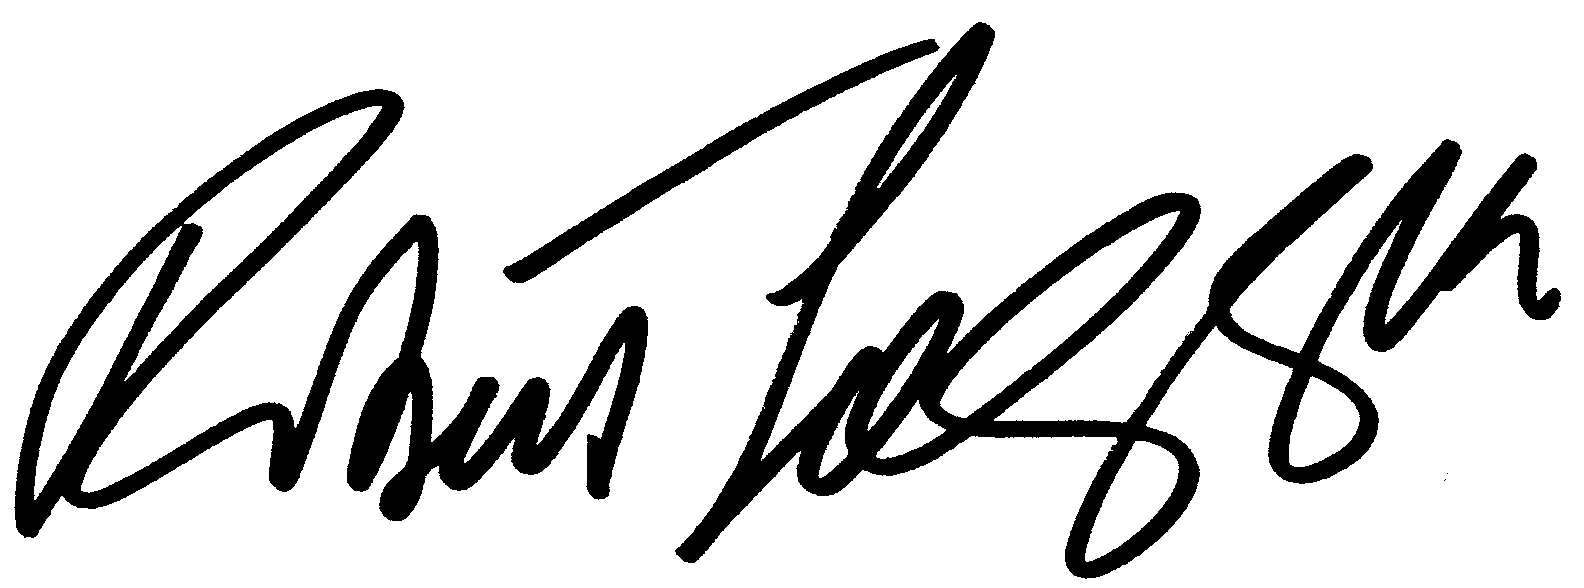 Robert Loggia autograph facsimile